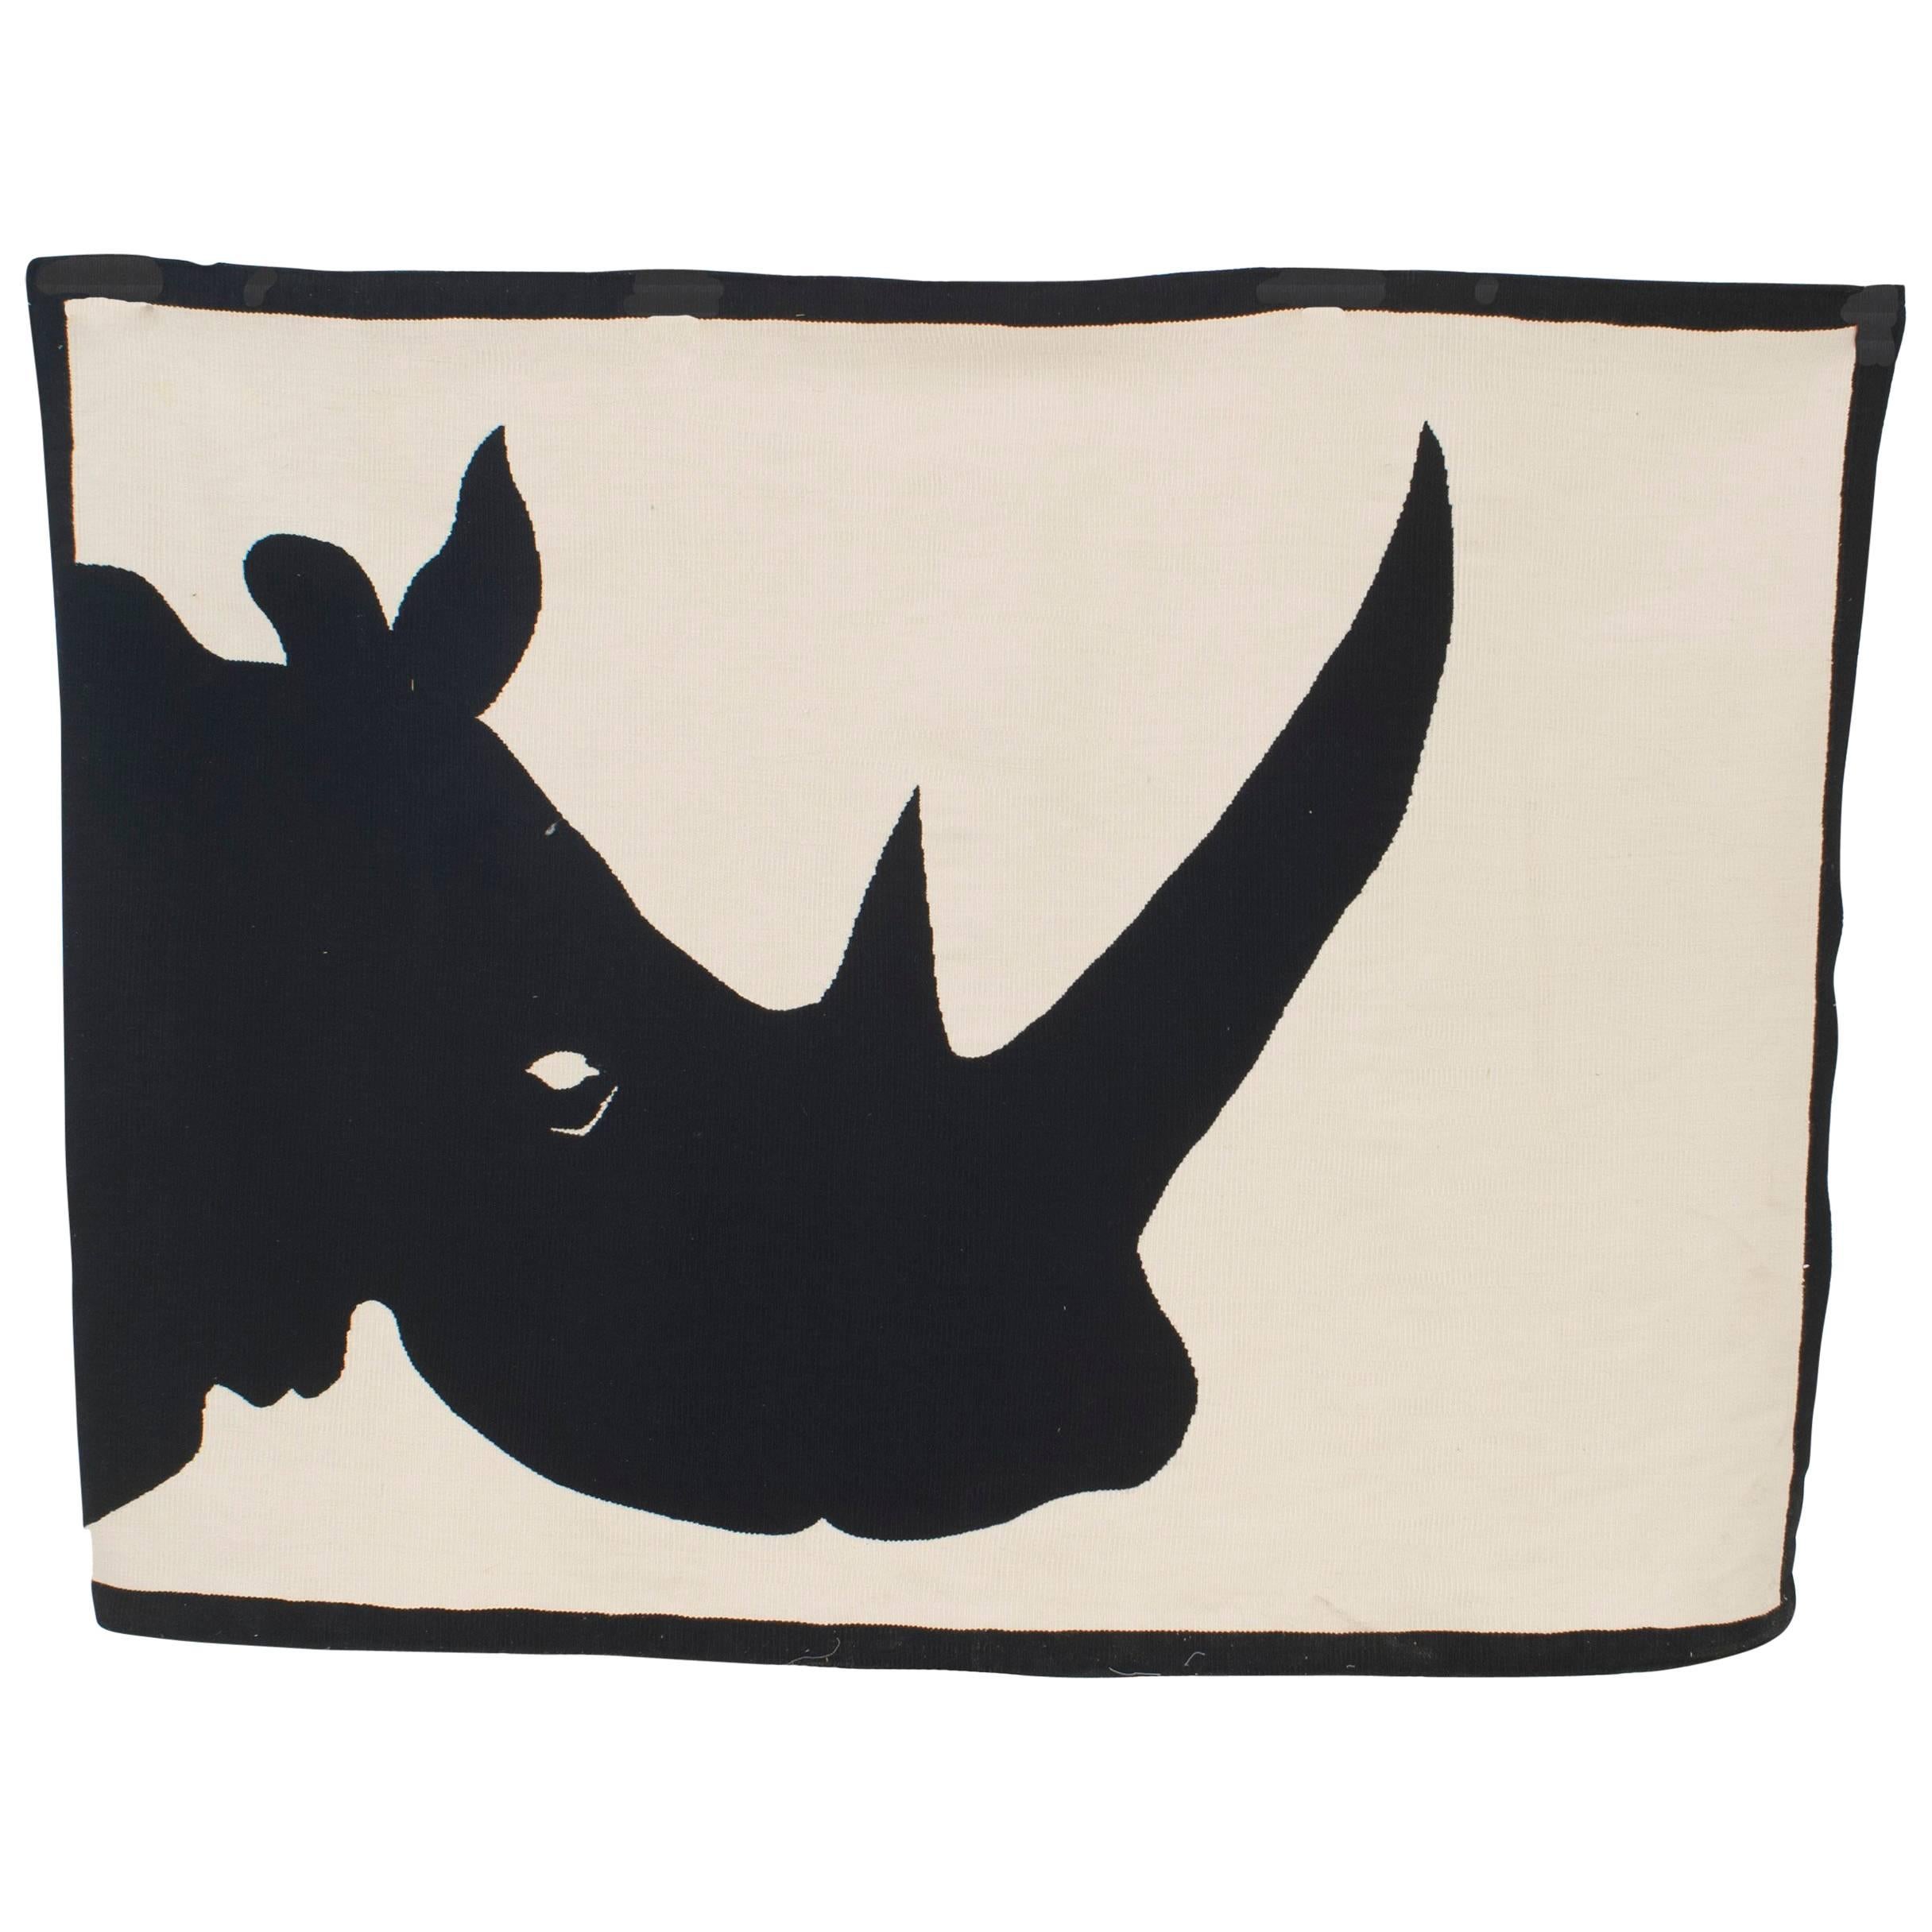 Tapisserie contemporaine Rhino de Bradfield en noir et blanc